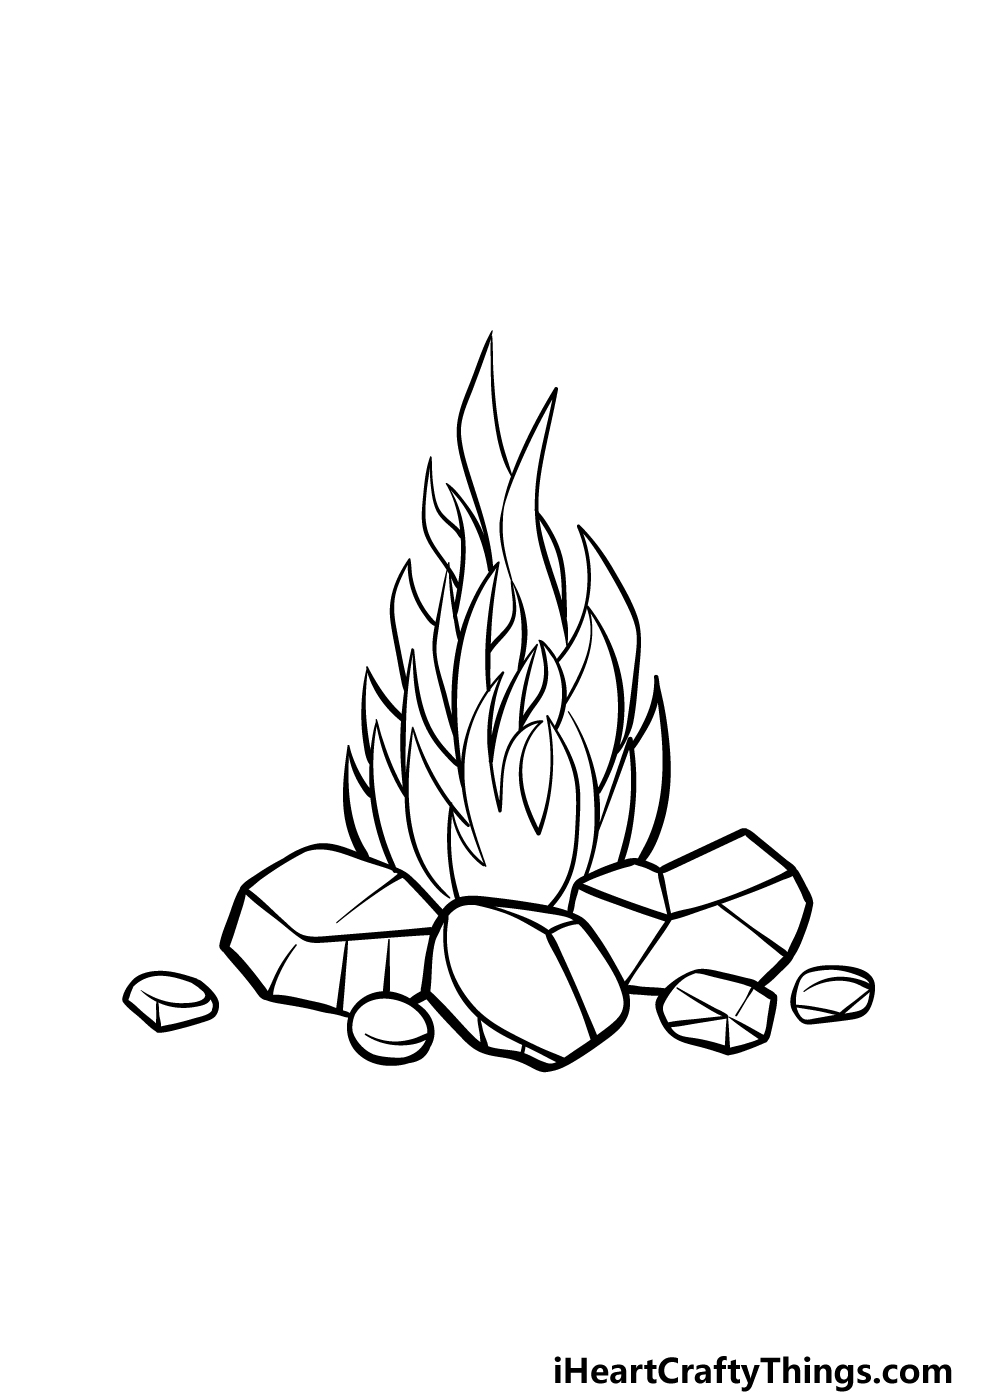 how to draw a cartoon fire step 5